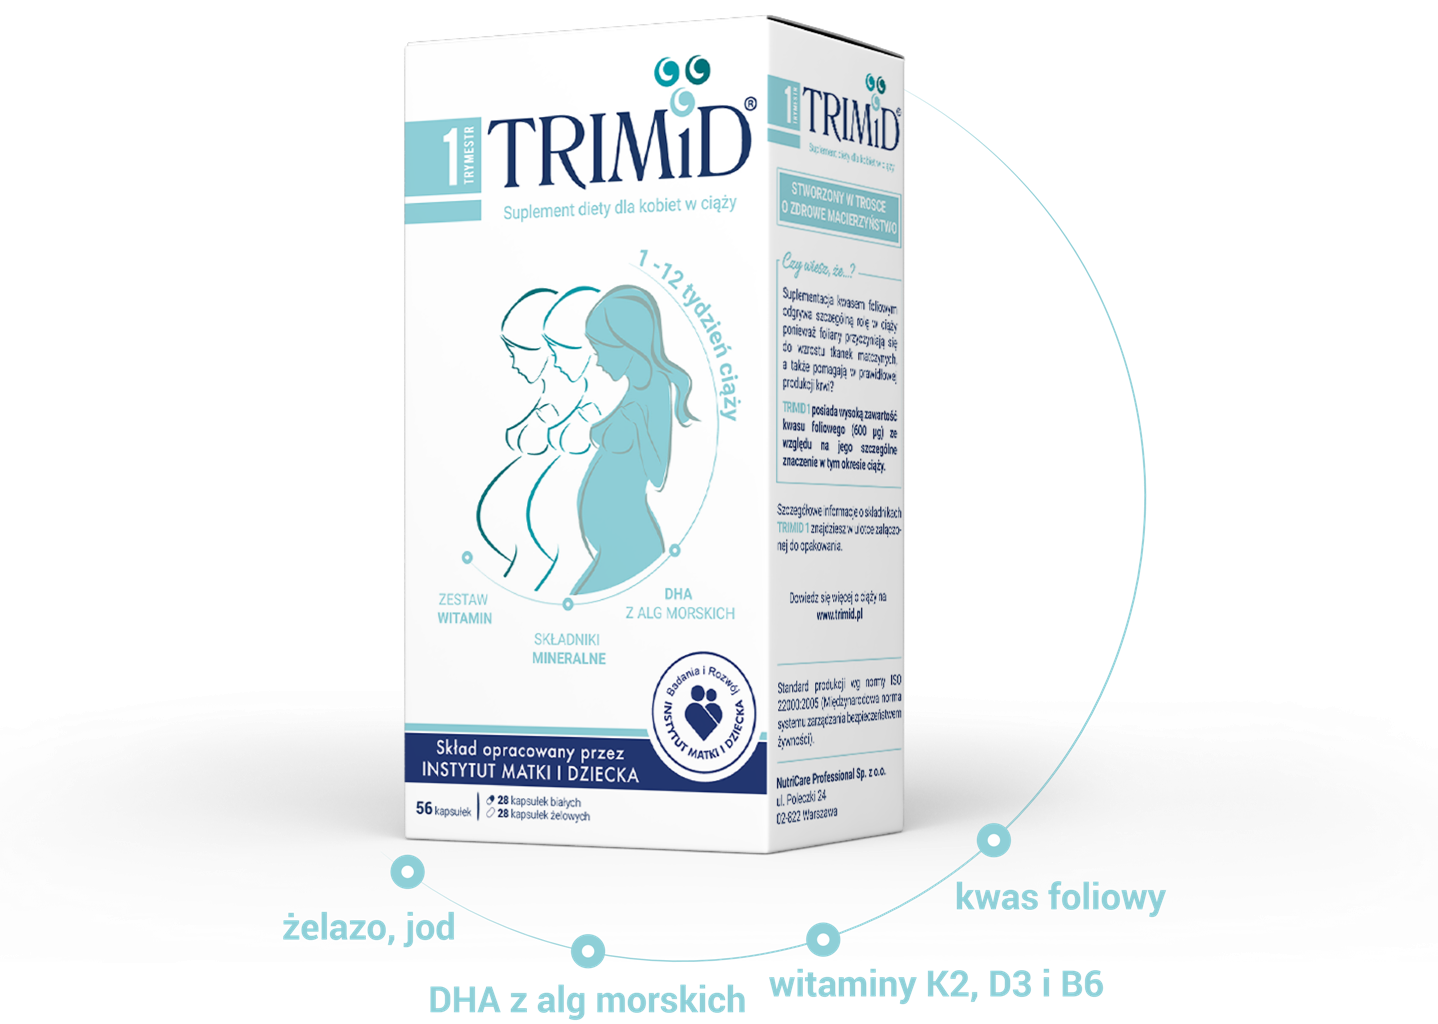 Trimid Suplement Diety Tagomagopl